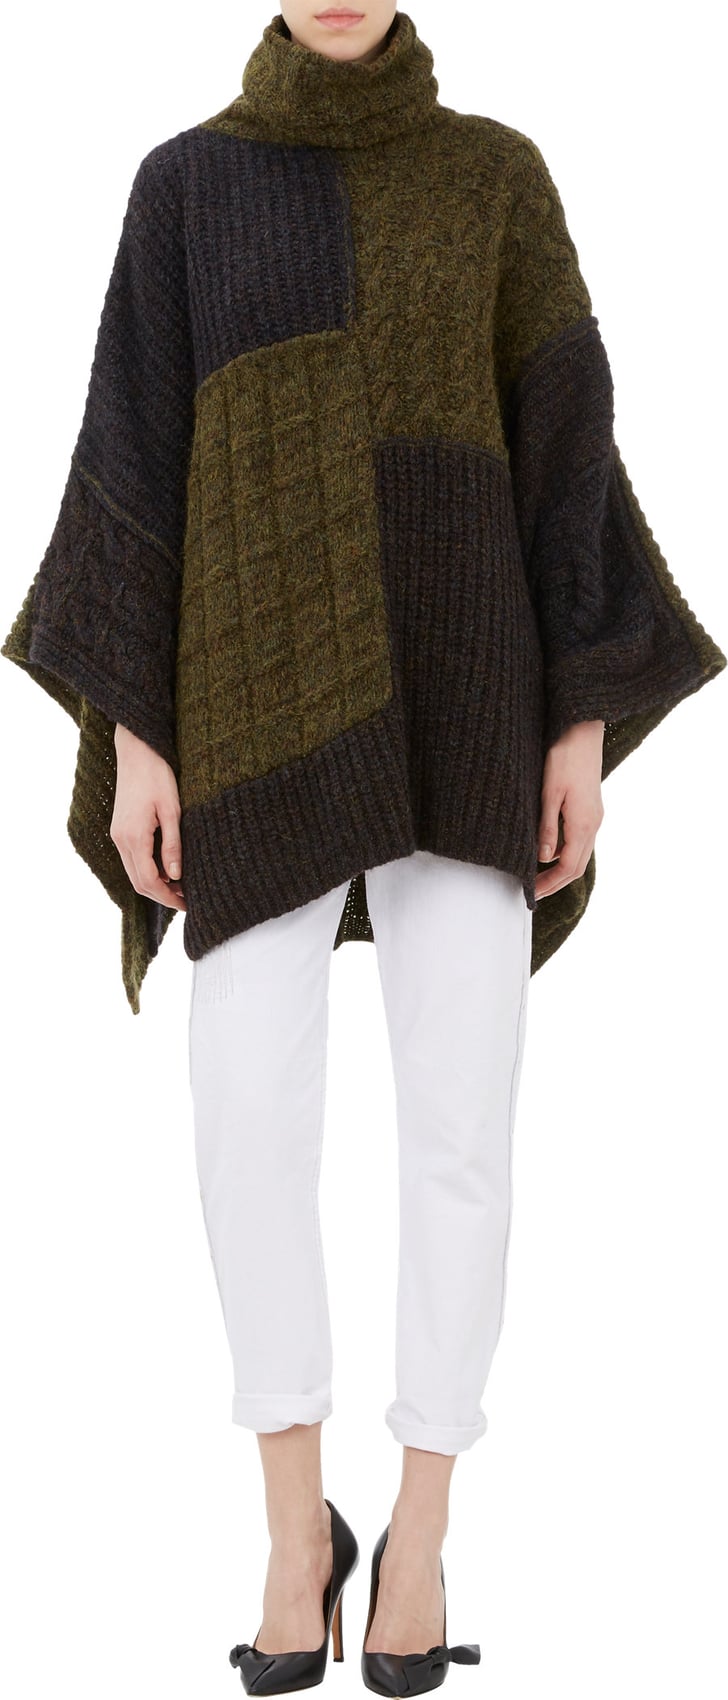 Isabel Marant Raquel Poncho Sweater | Fall Fashion Shopping Guide ...